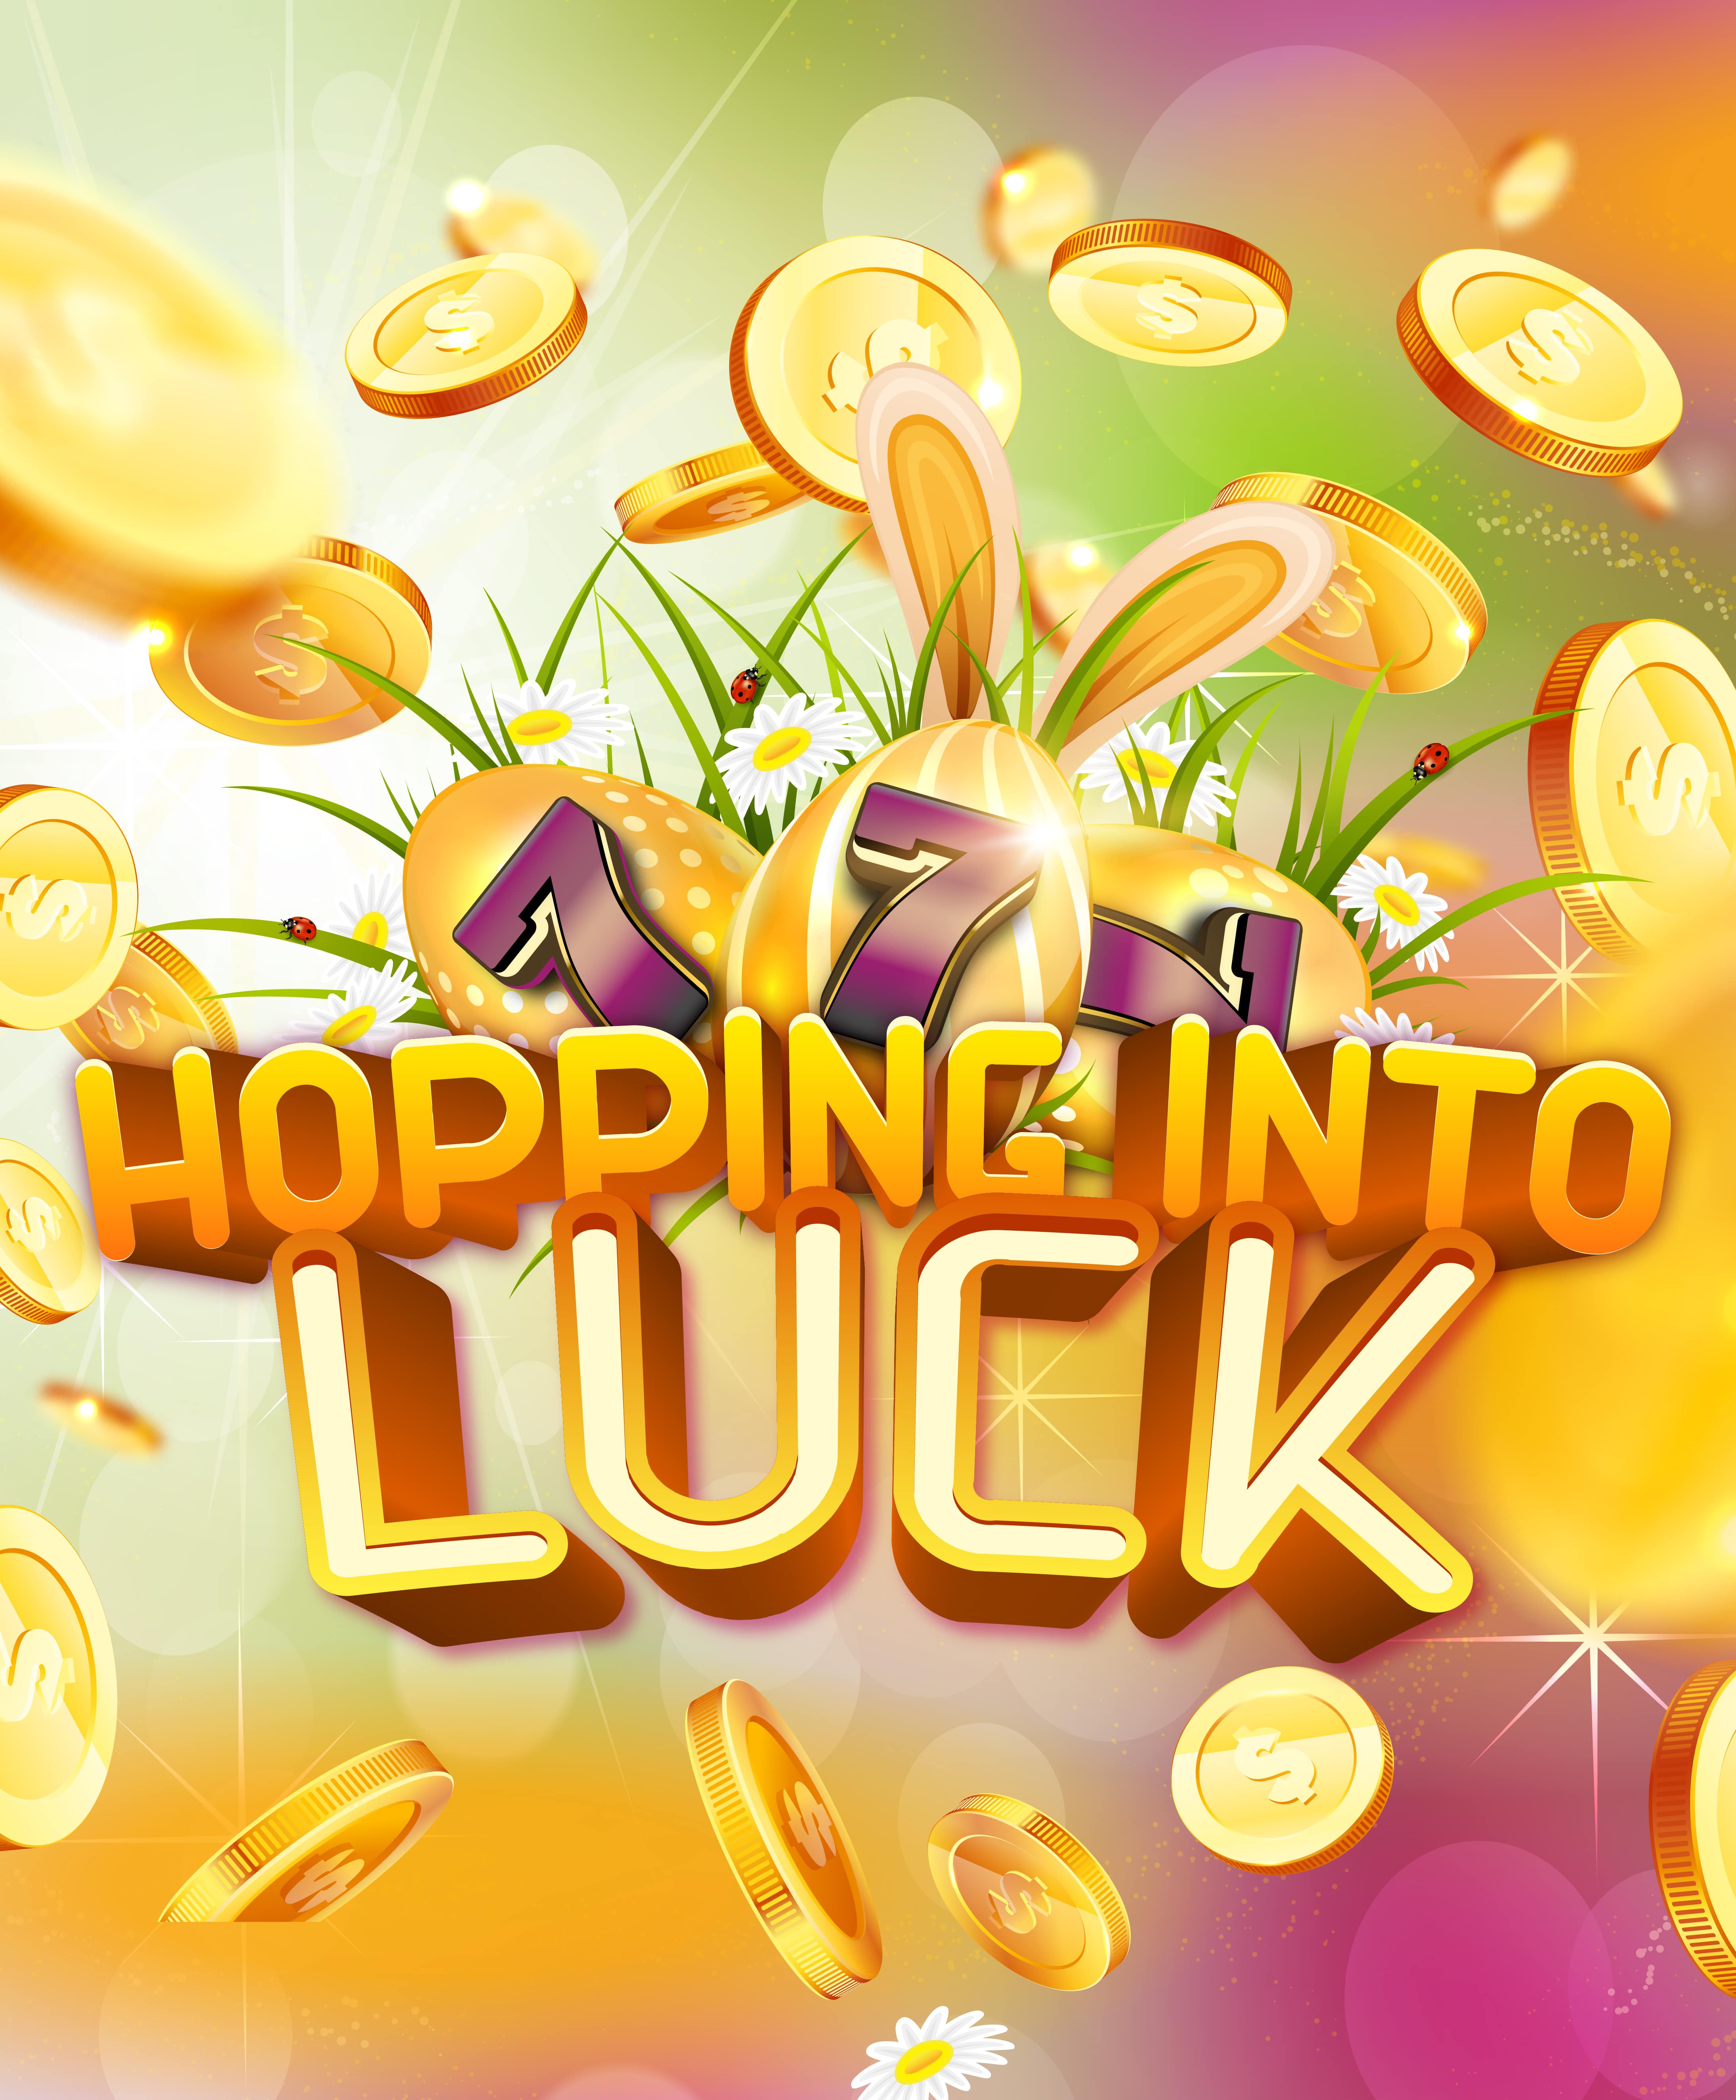 Hopping Into Luck